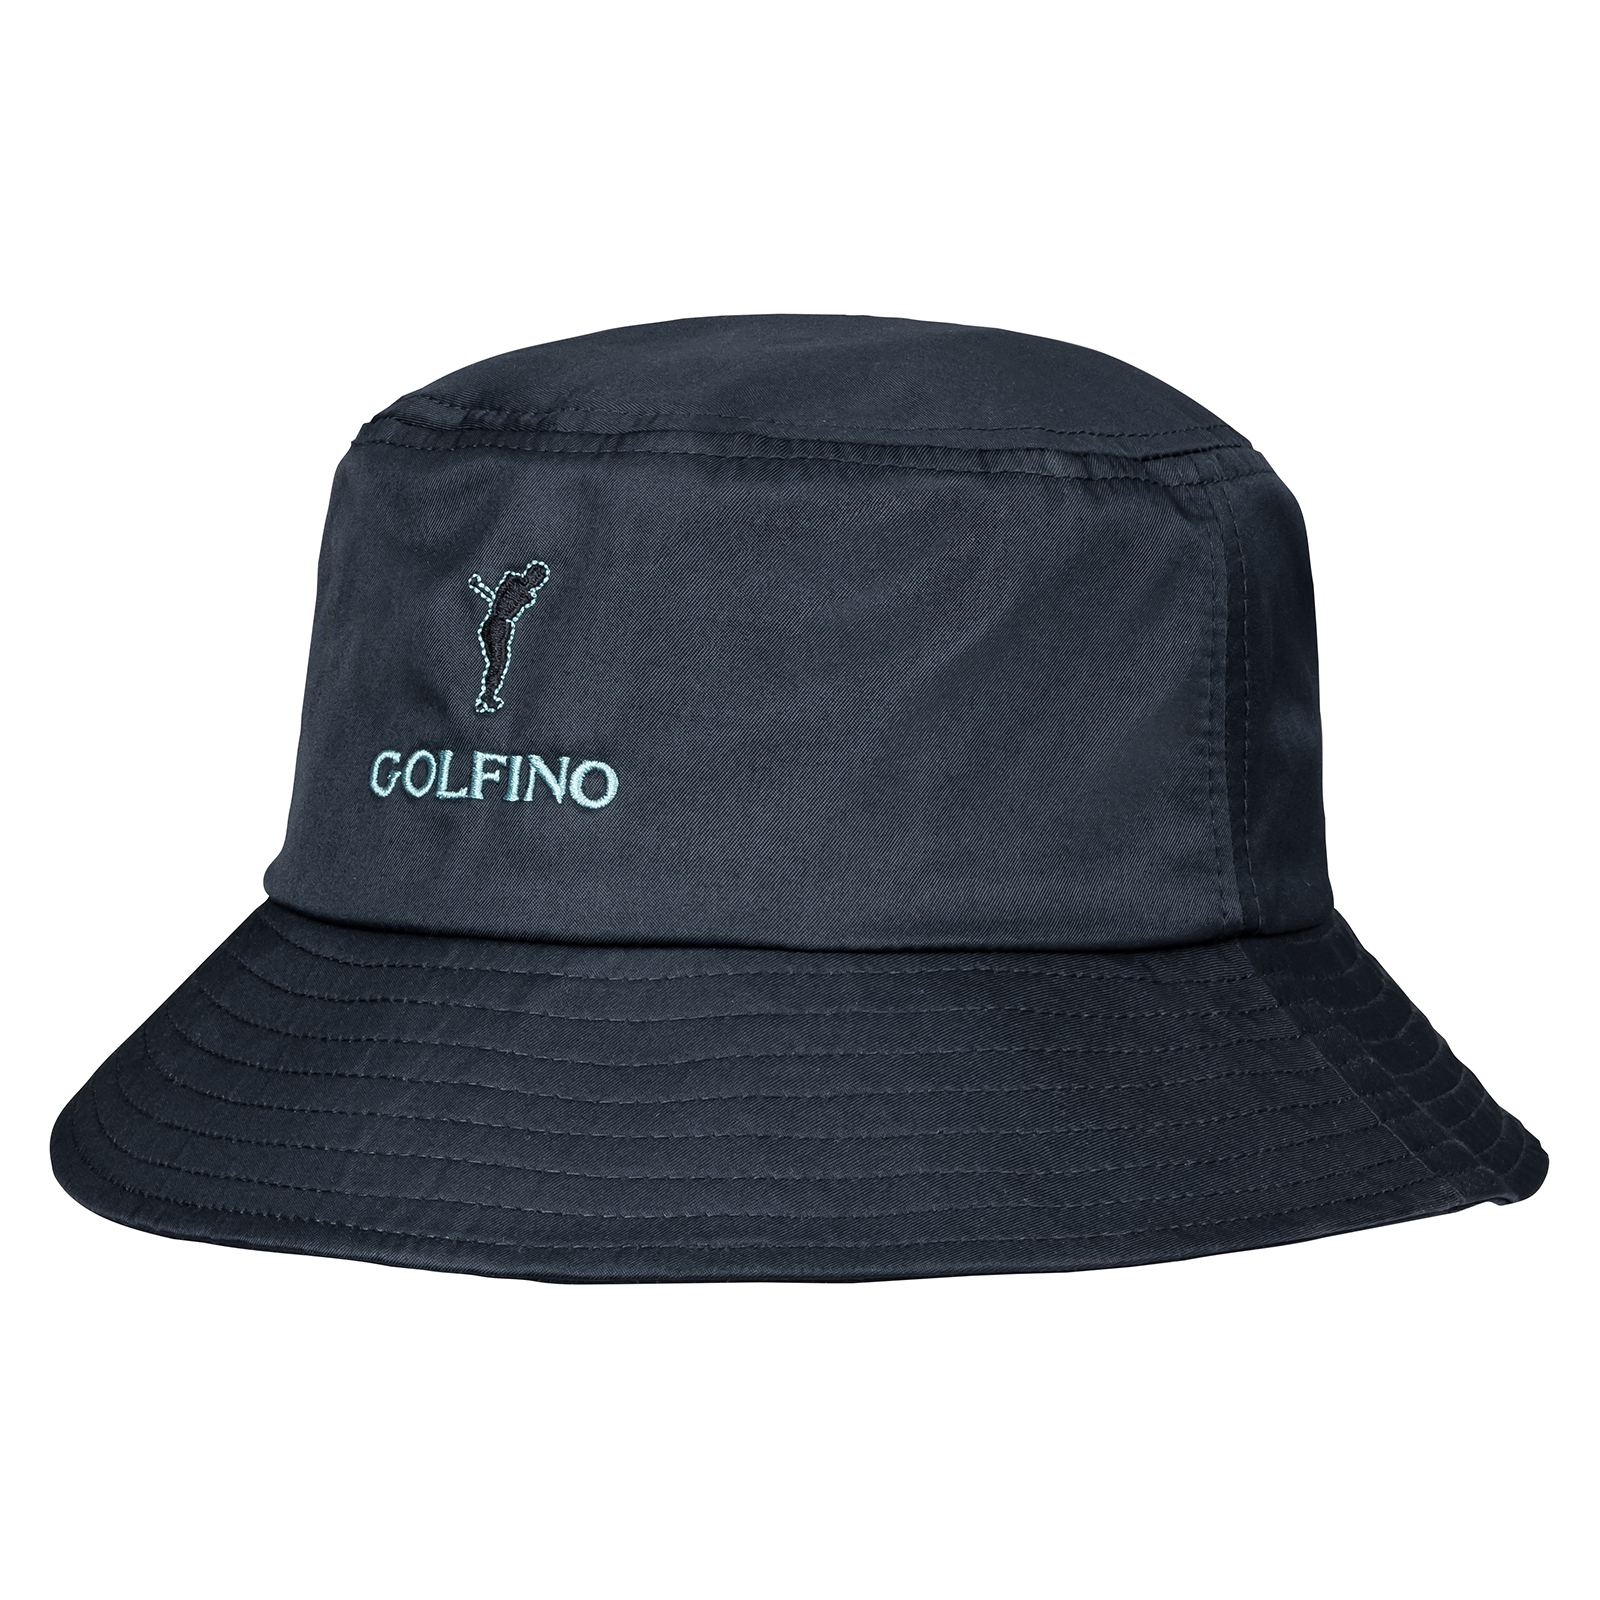 Men's casual golf hat 